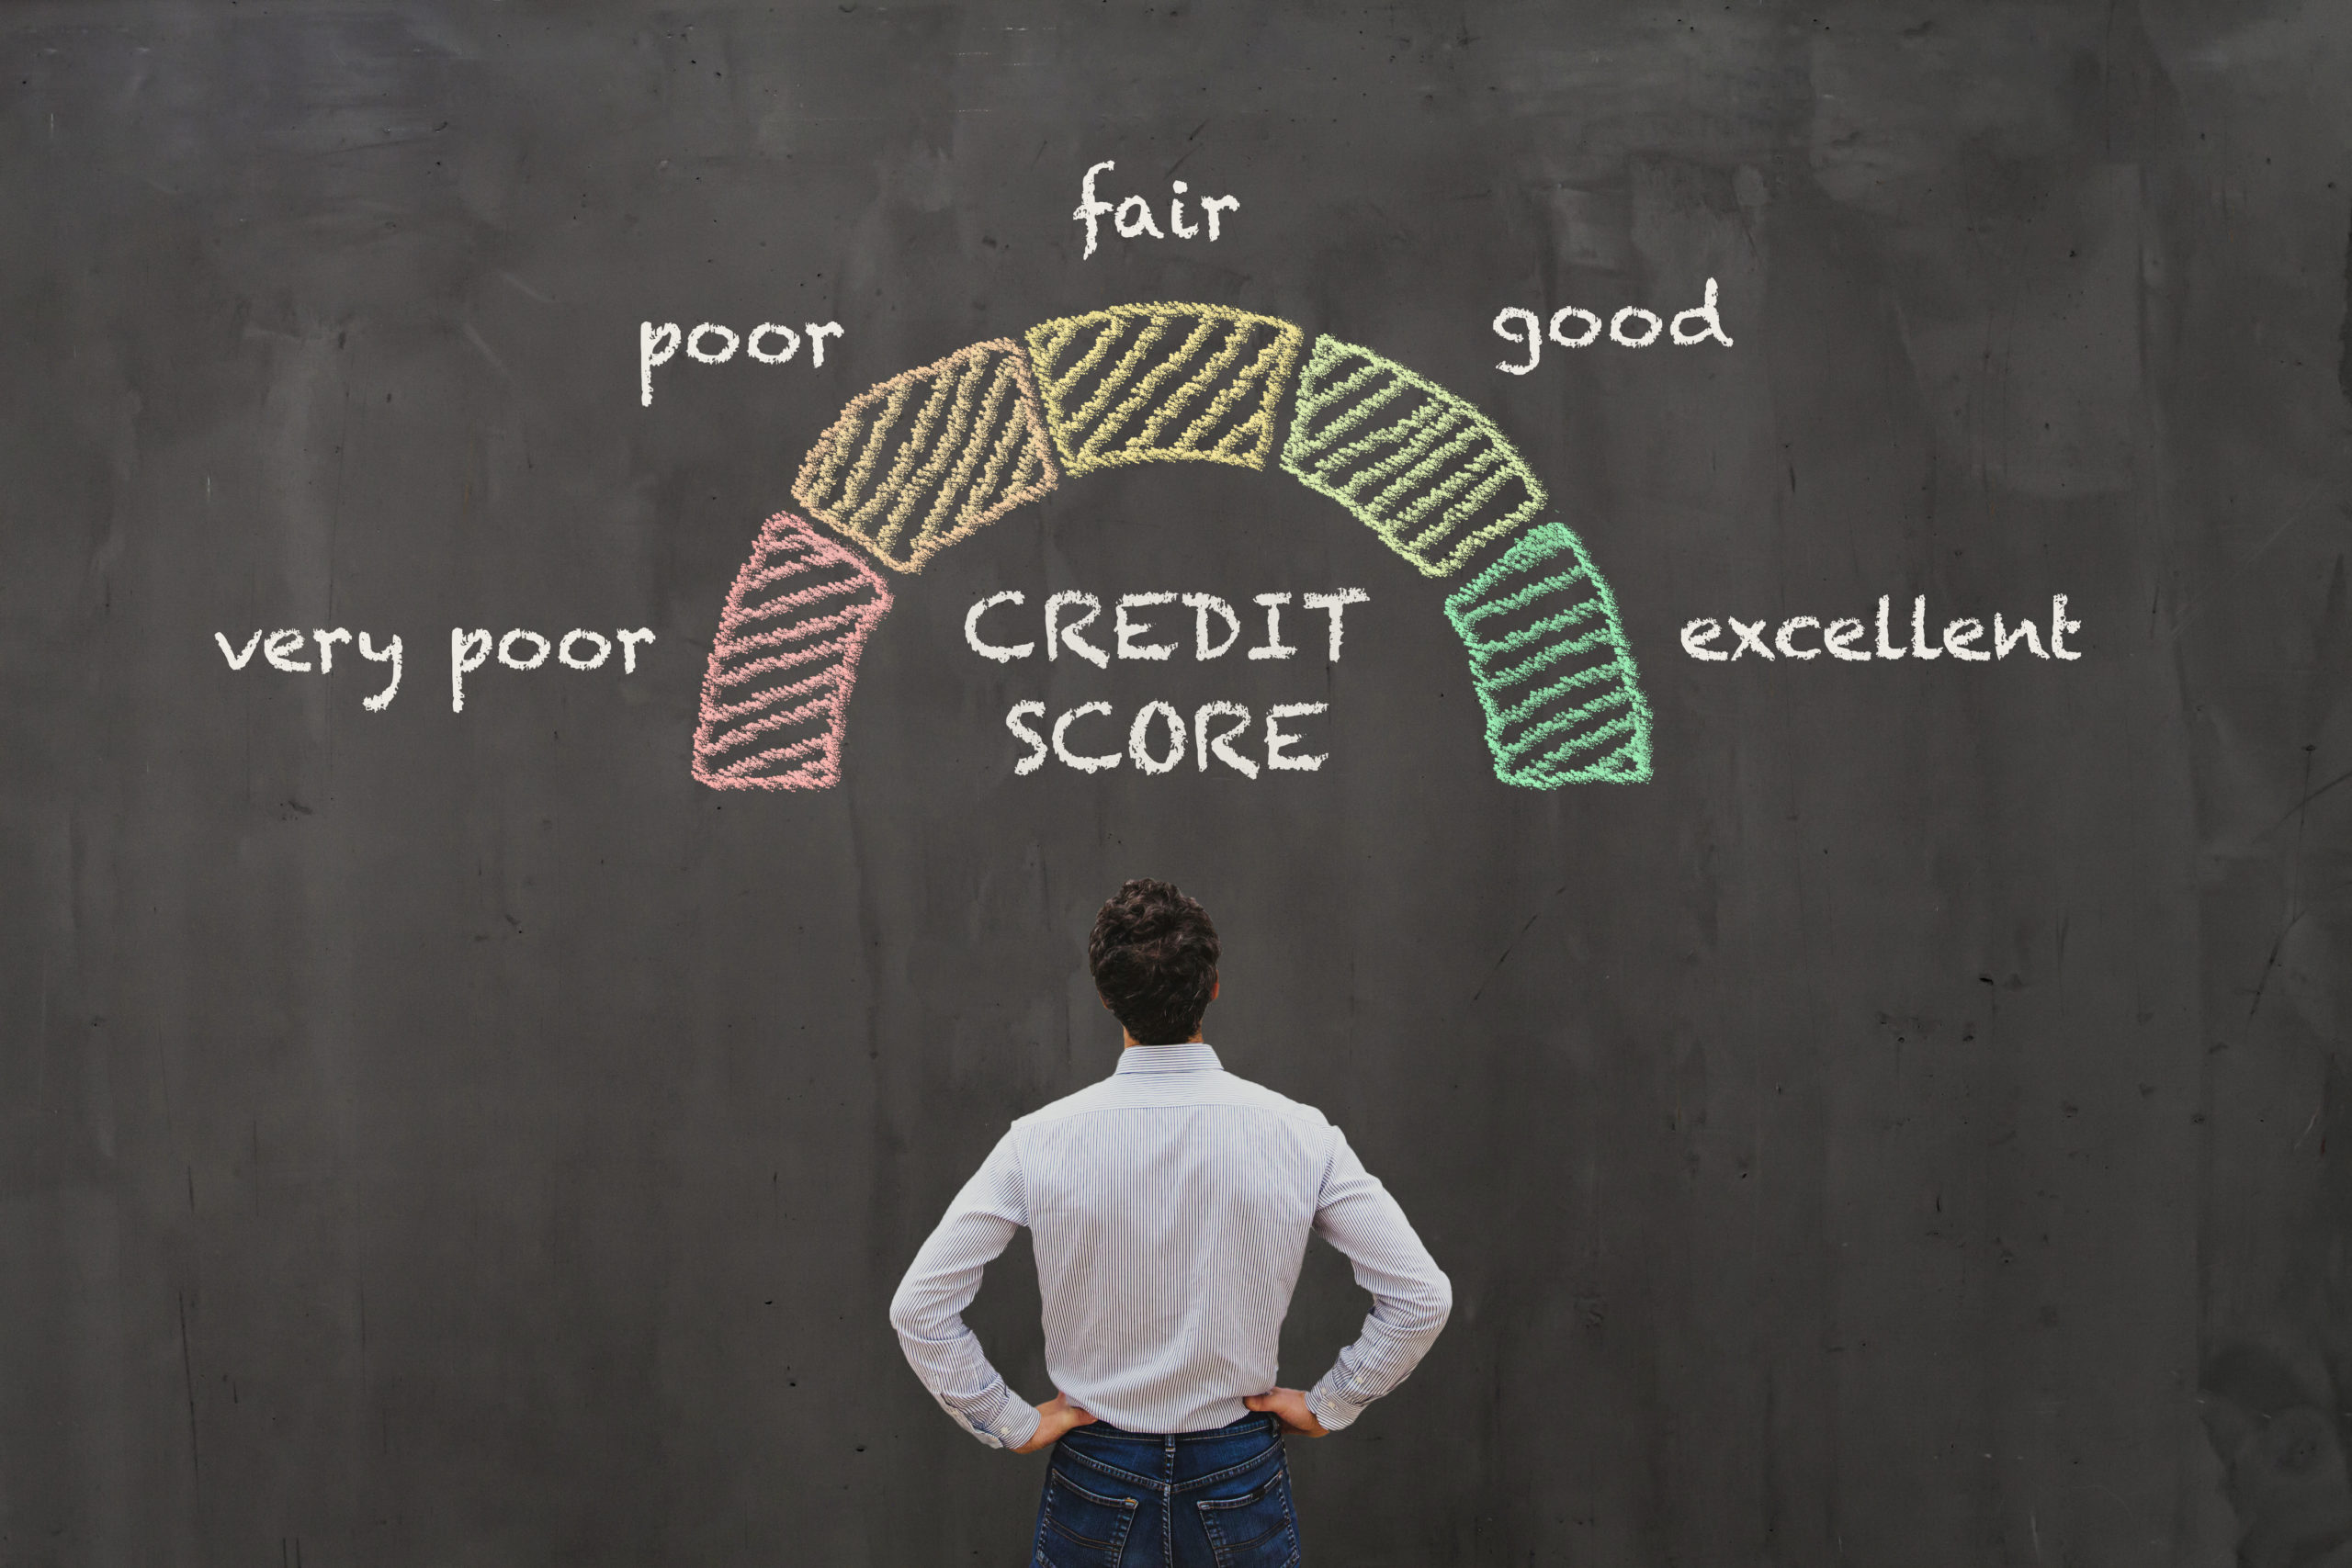 how increase credit score